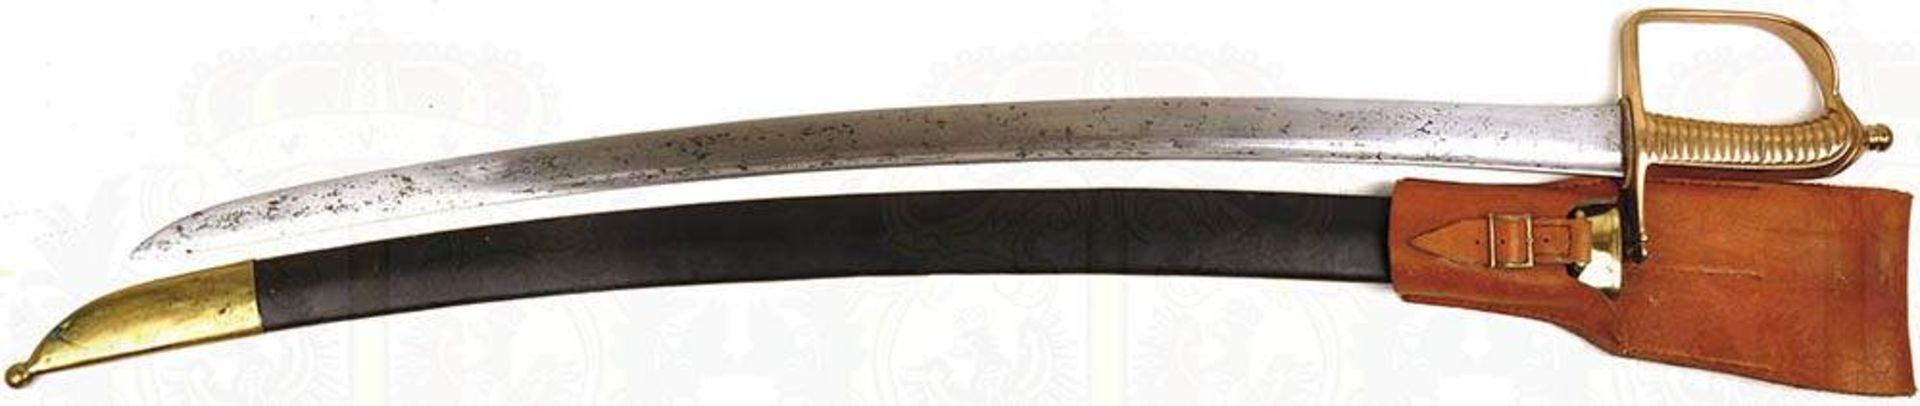 INFANTERIE-SÄBEL M 1806, gekrümmte Keilklinge m. beids., schmaler Rücken-Hohlbahn, L. 64 cm,